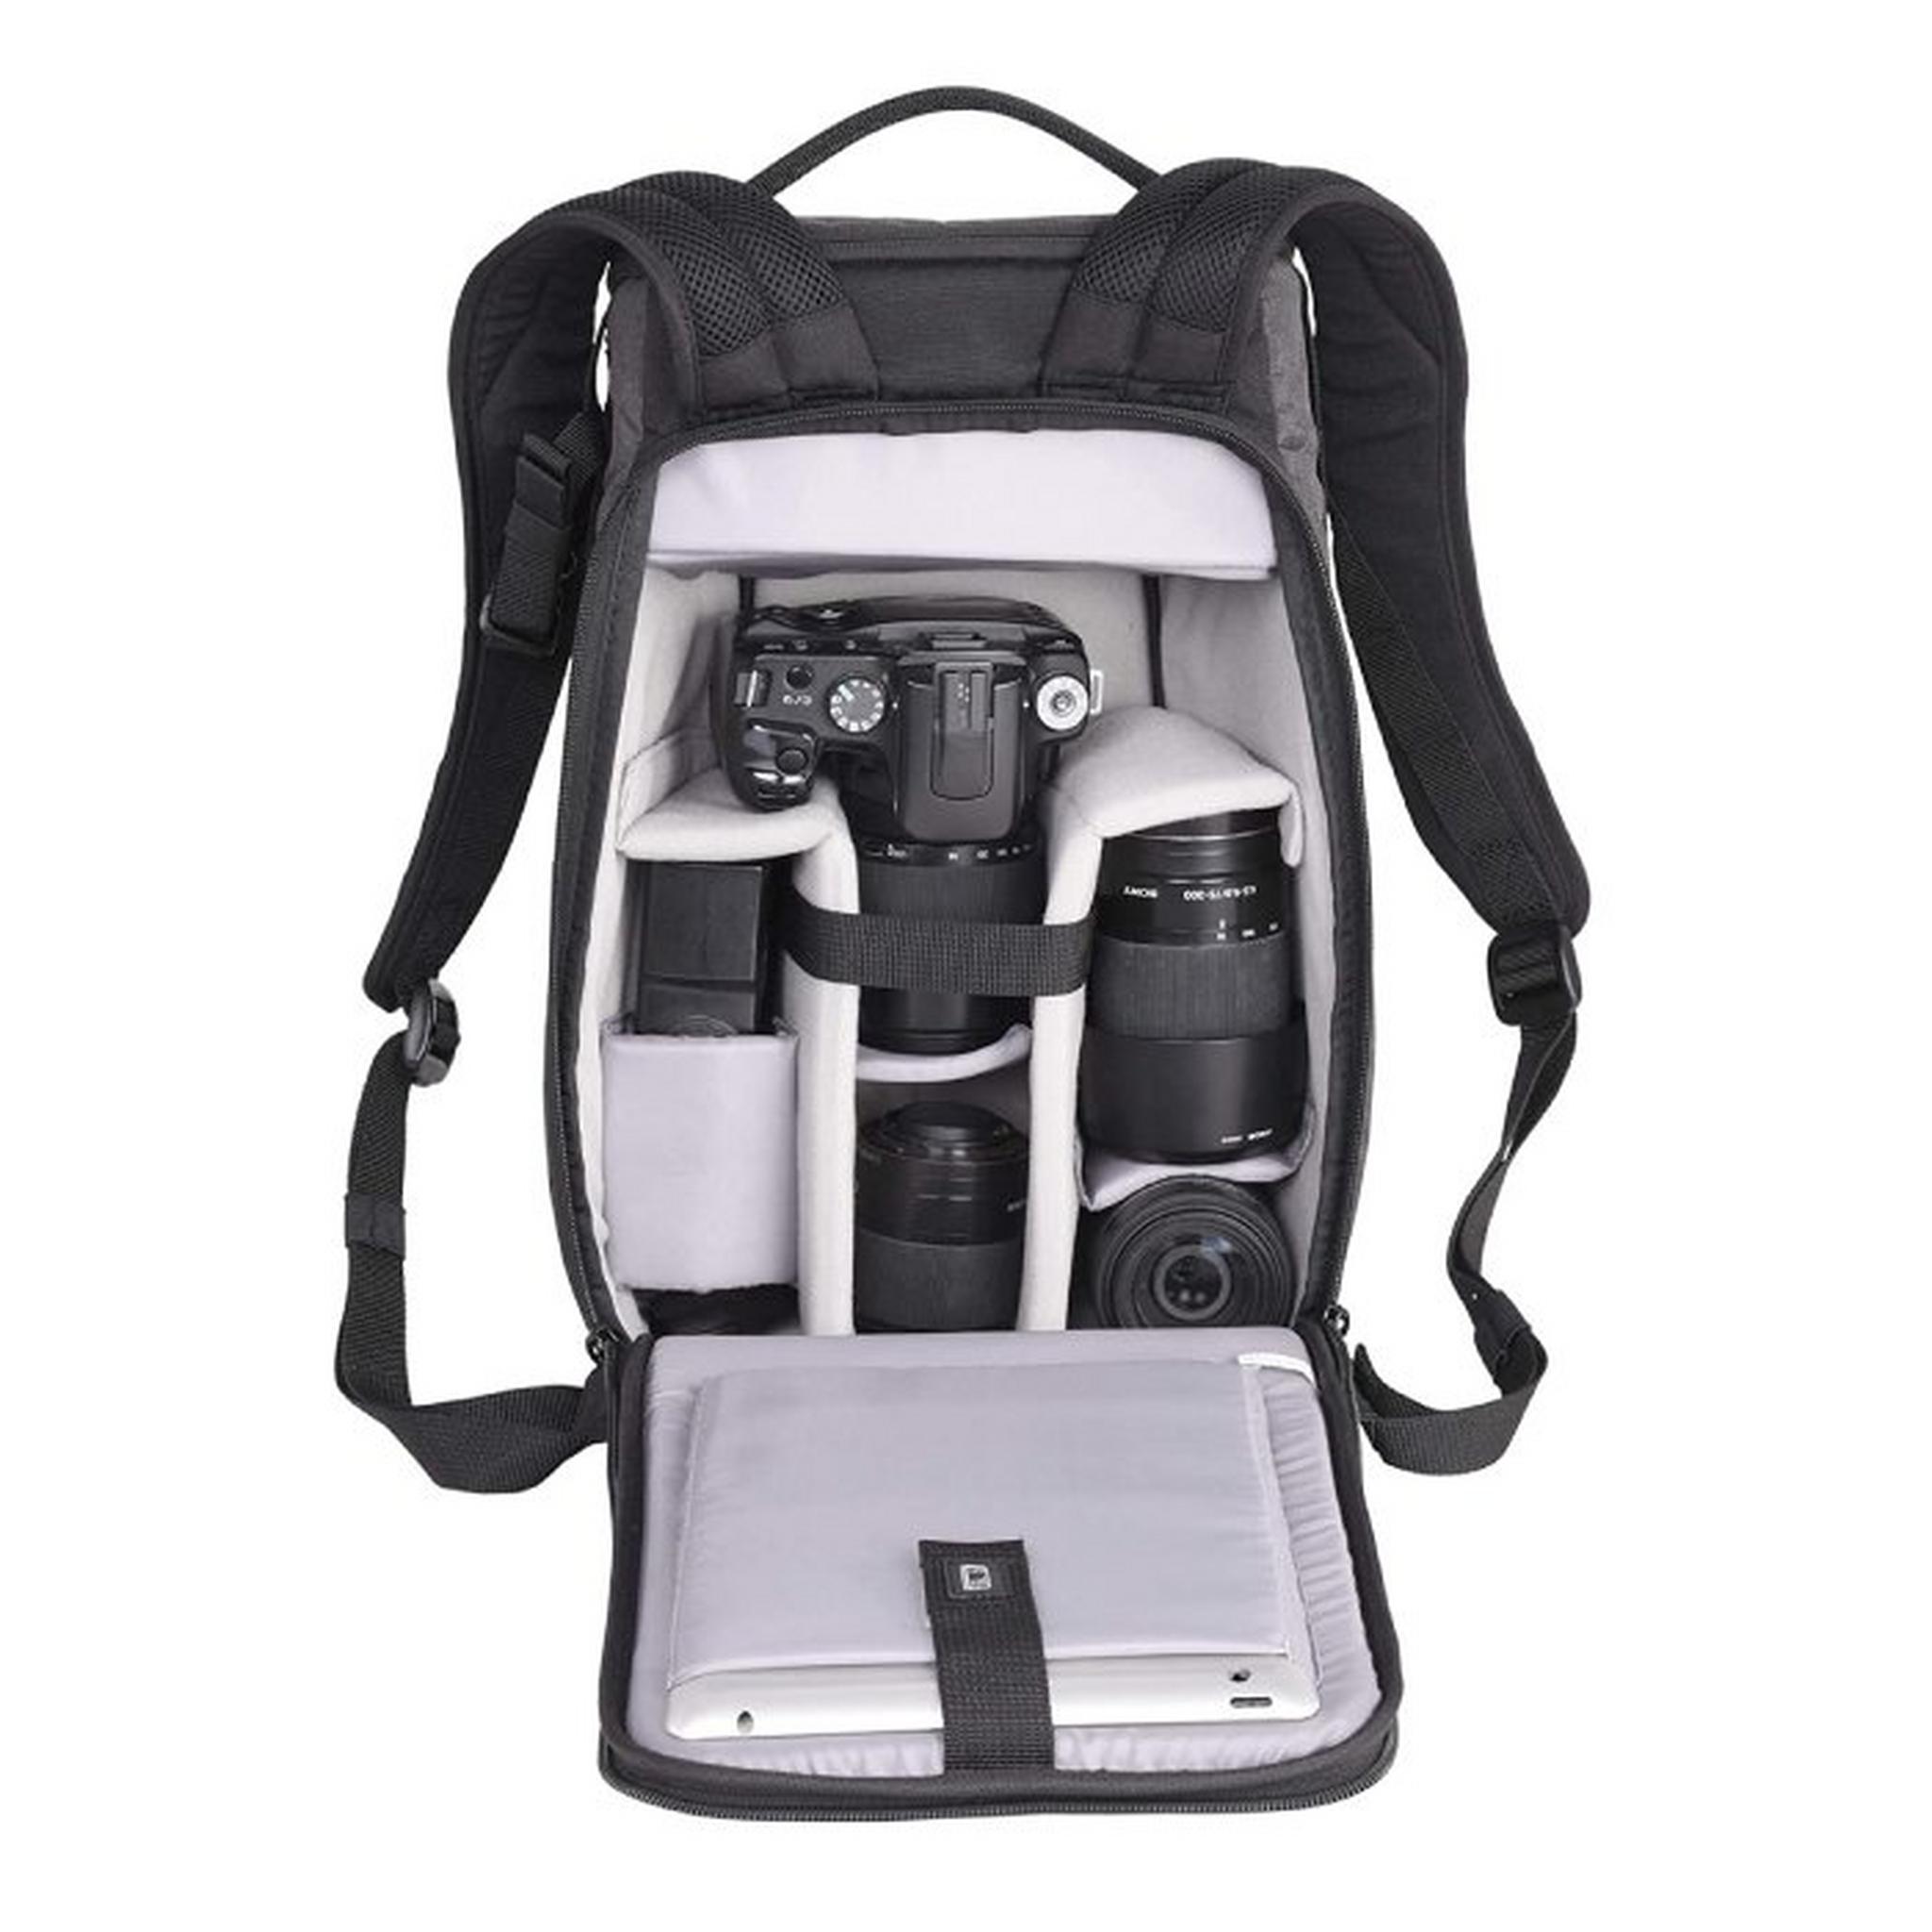 Vanguard Vesta Aspire 41 GY Camera Backpack - Grey